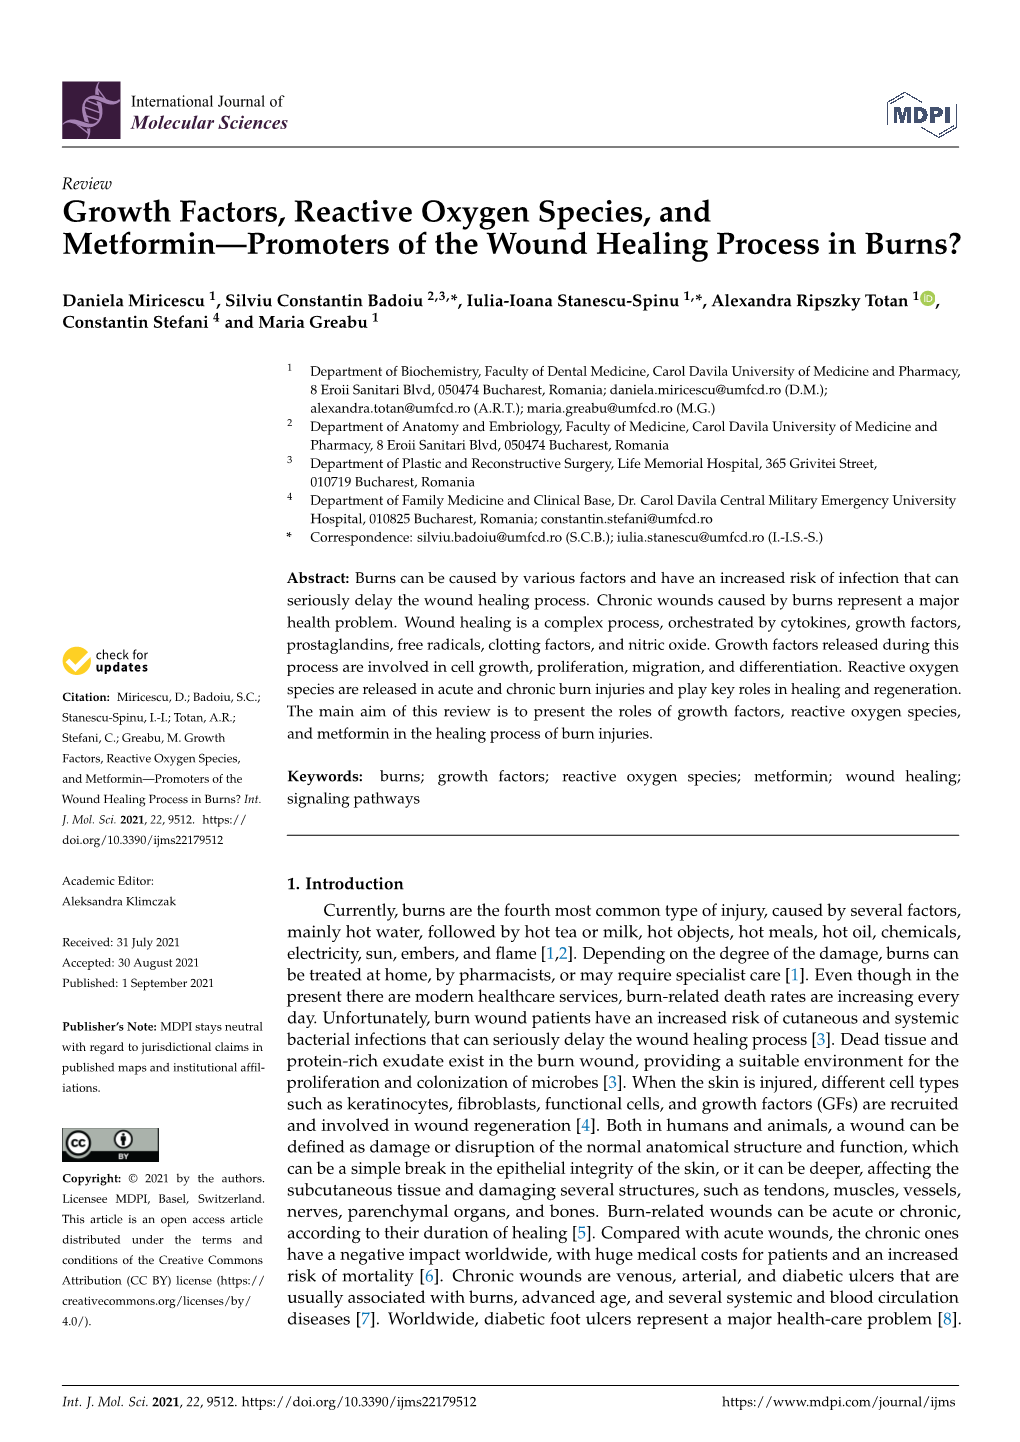 Growth Factors, Reactive Oxygen Species, and Metformin— Promoters of the Wound Healing Process in Burns?